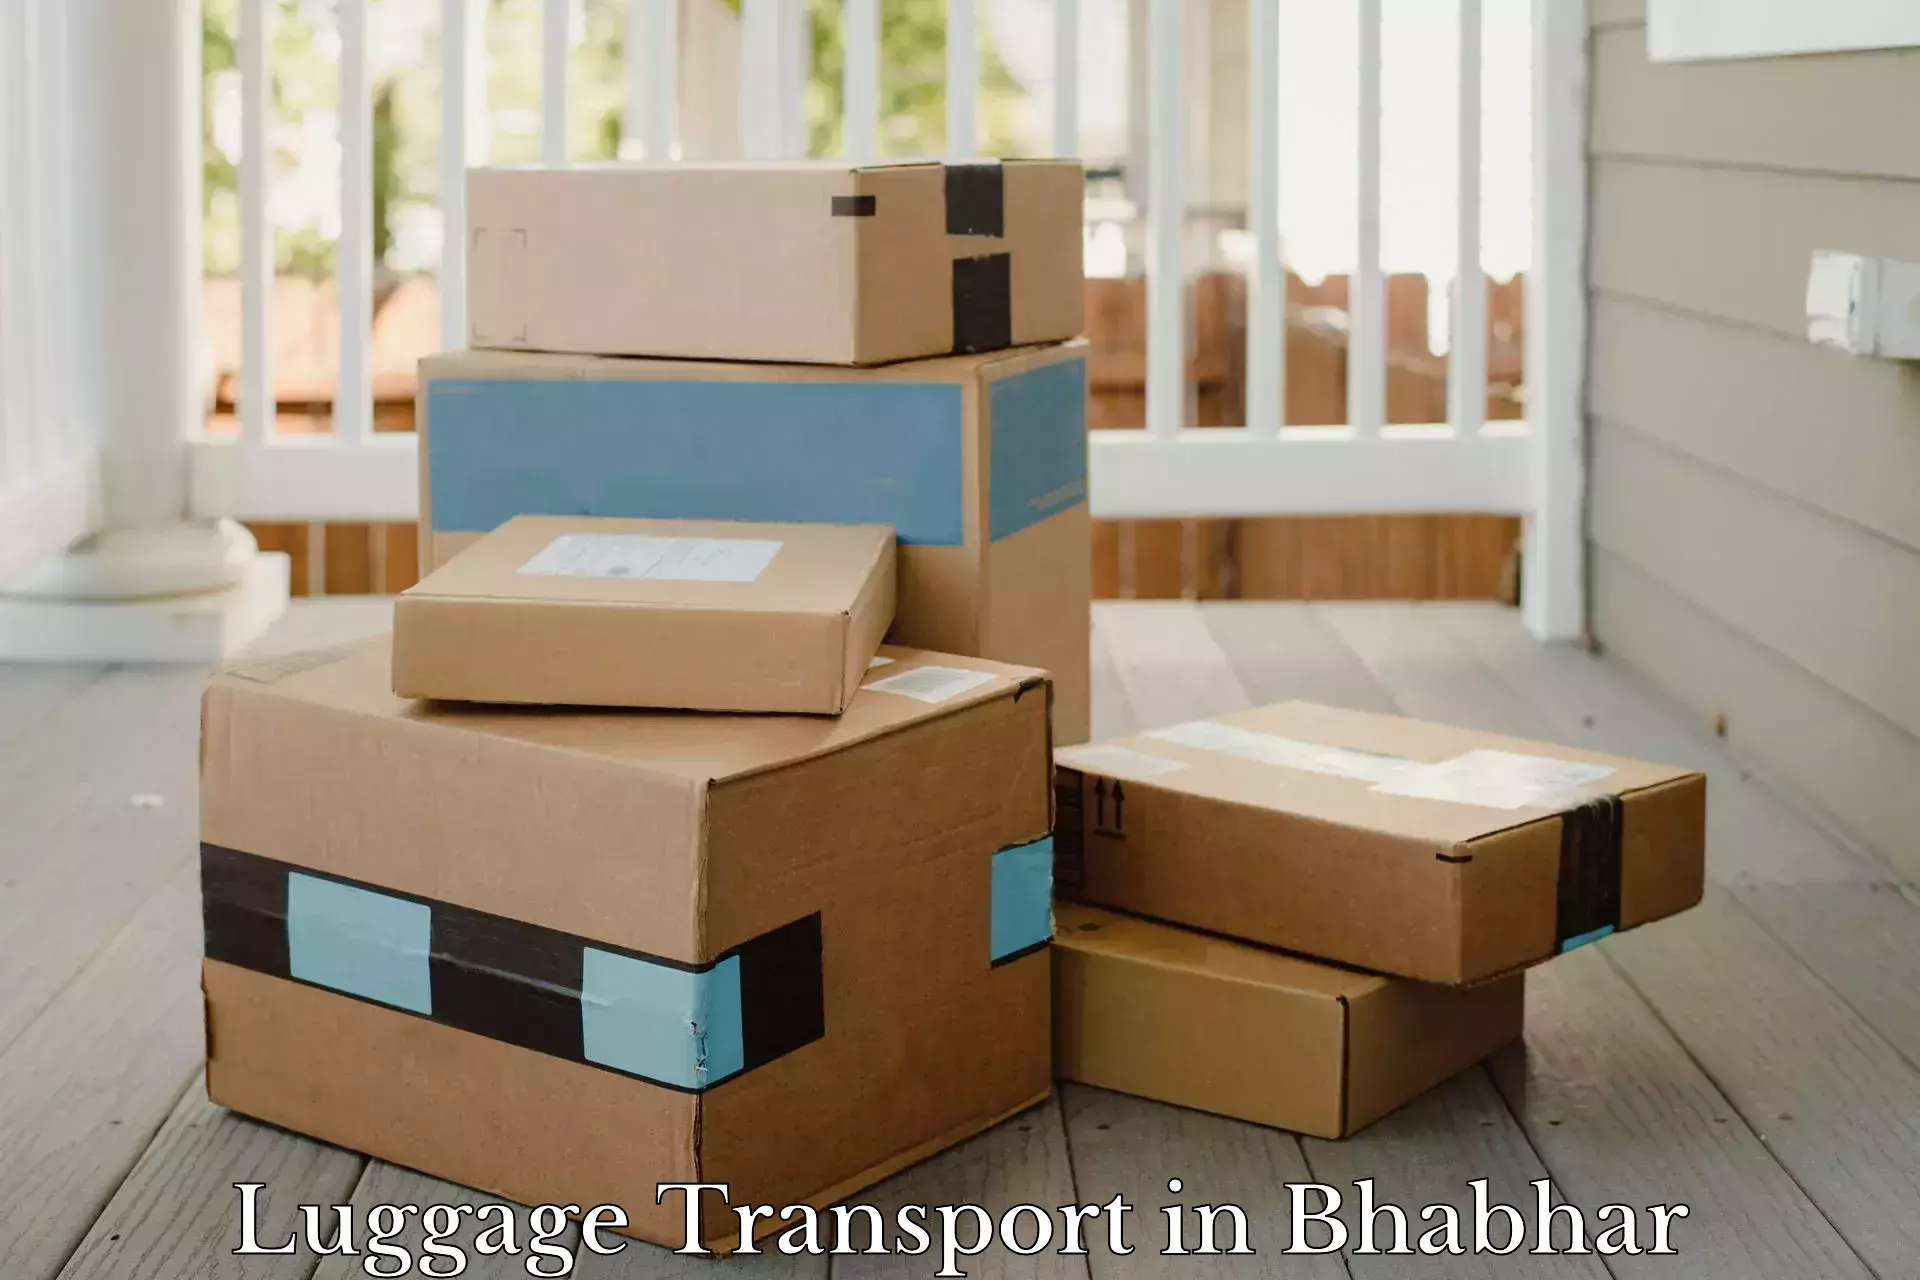 Luggage transport deals in Bhabhar